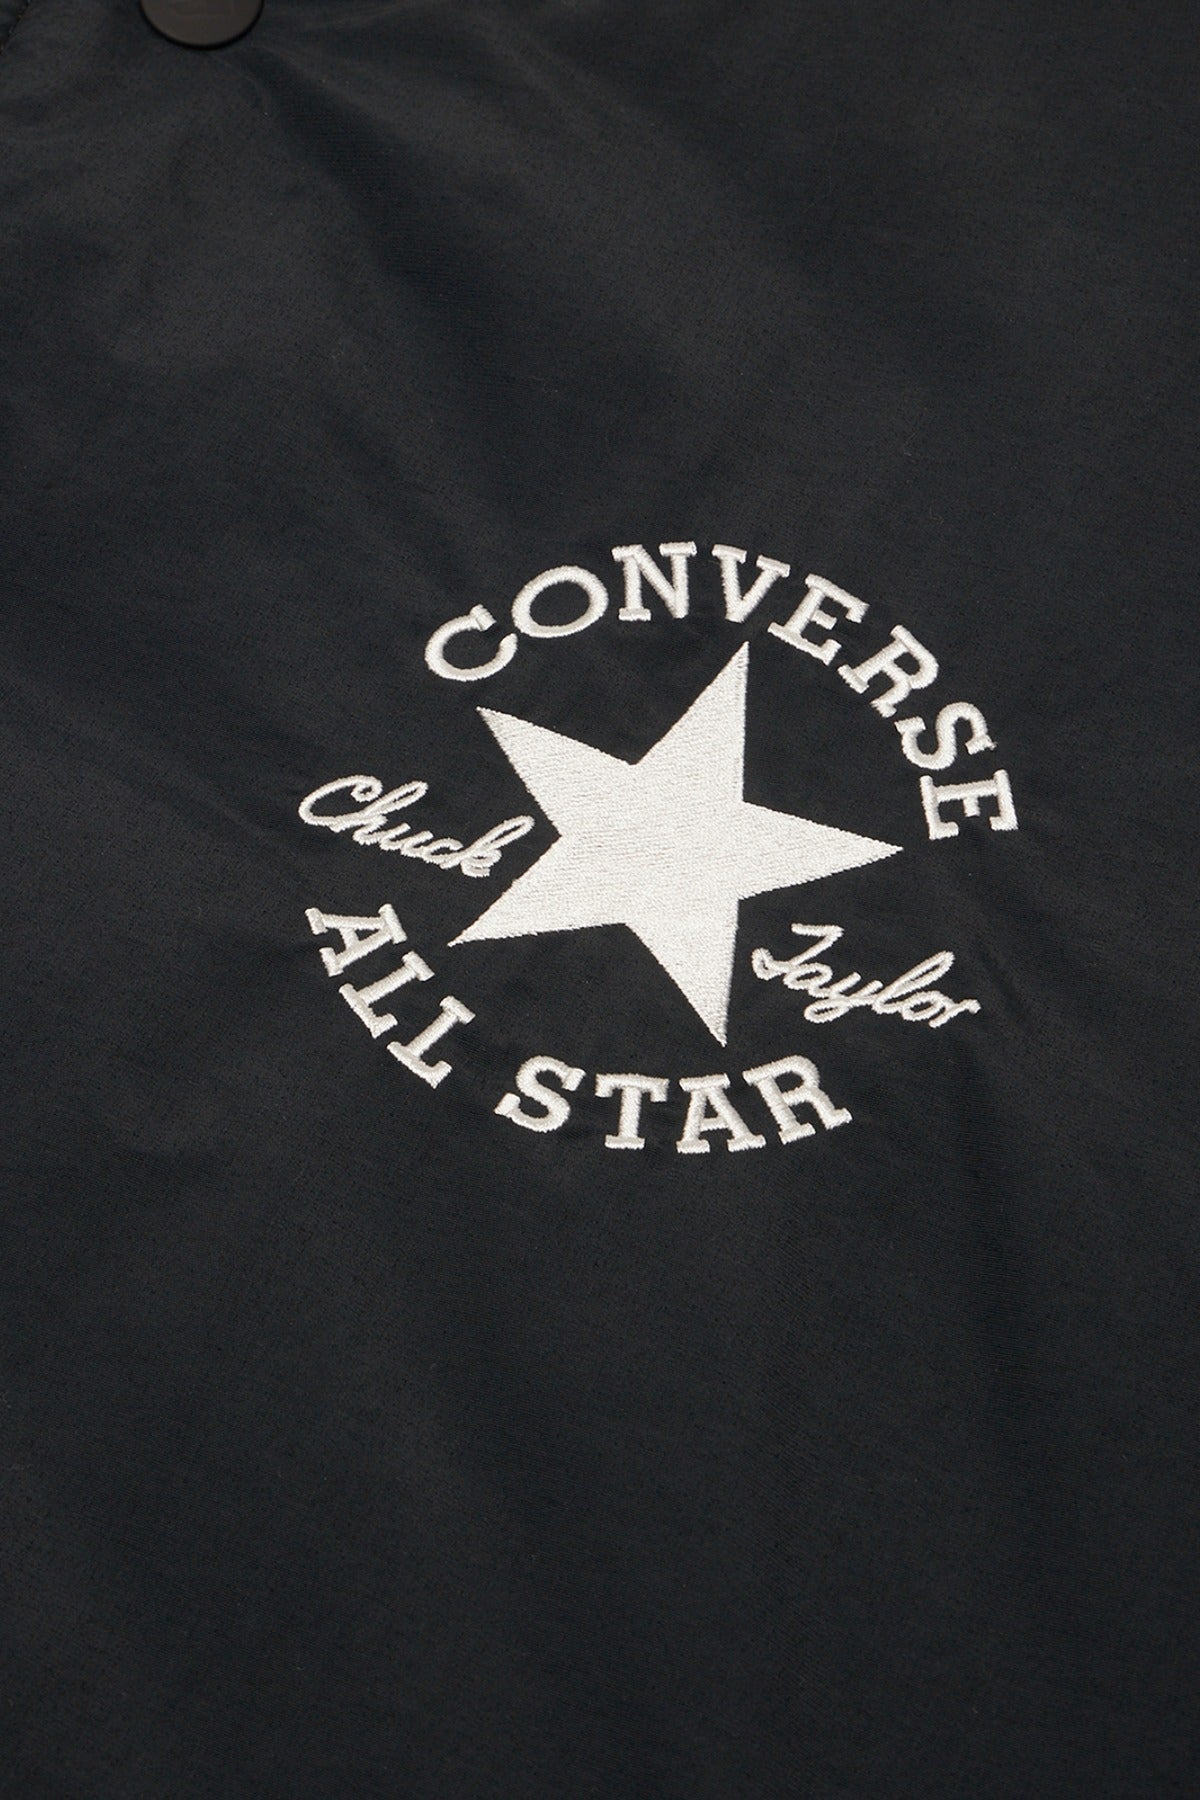 CONVERSE STAR CHEVRON en color NEGRO  (4)